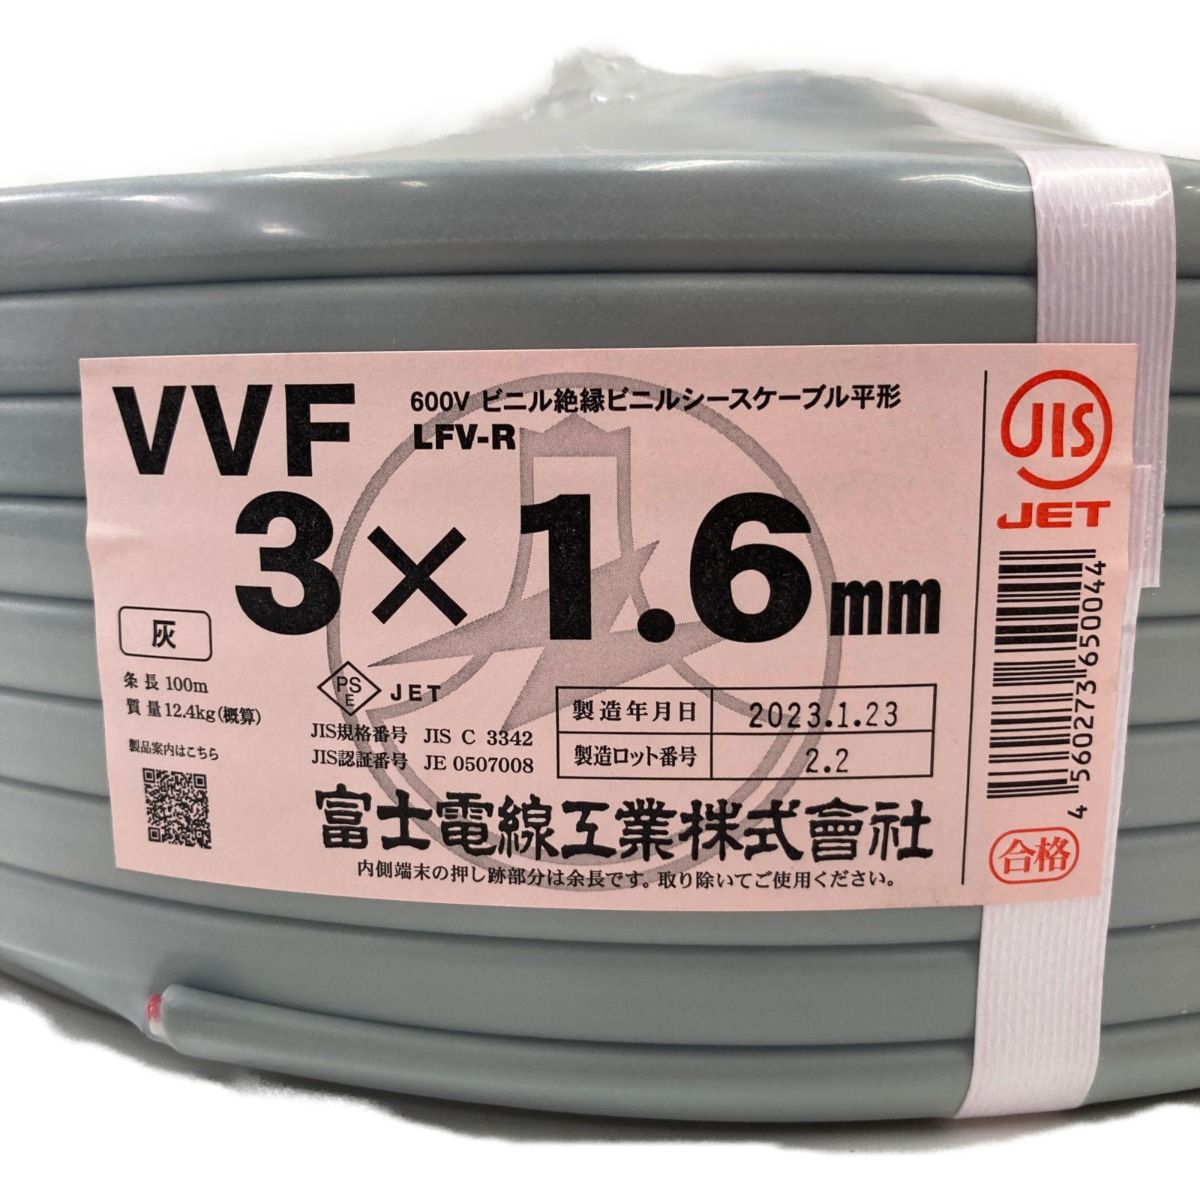 〇〇富士電線工業 電材 VVFケーブル 3芯 3× 1.6 LFV-R 100m 未開封品